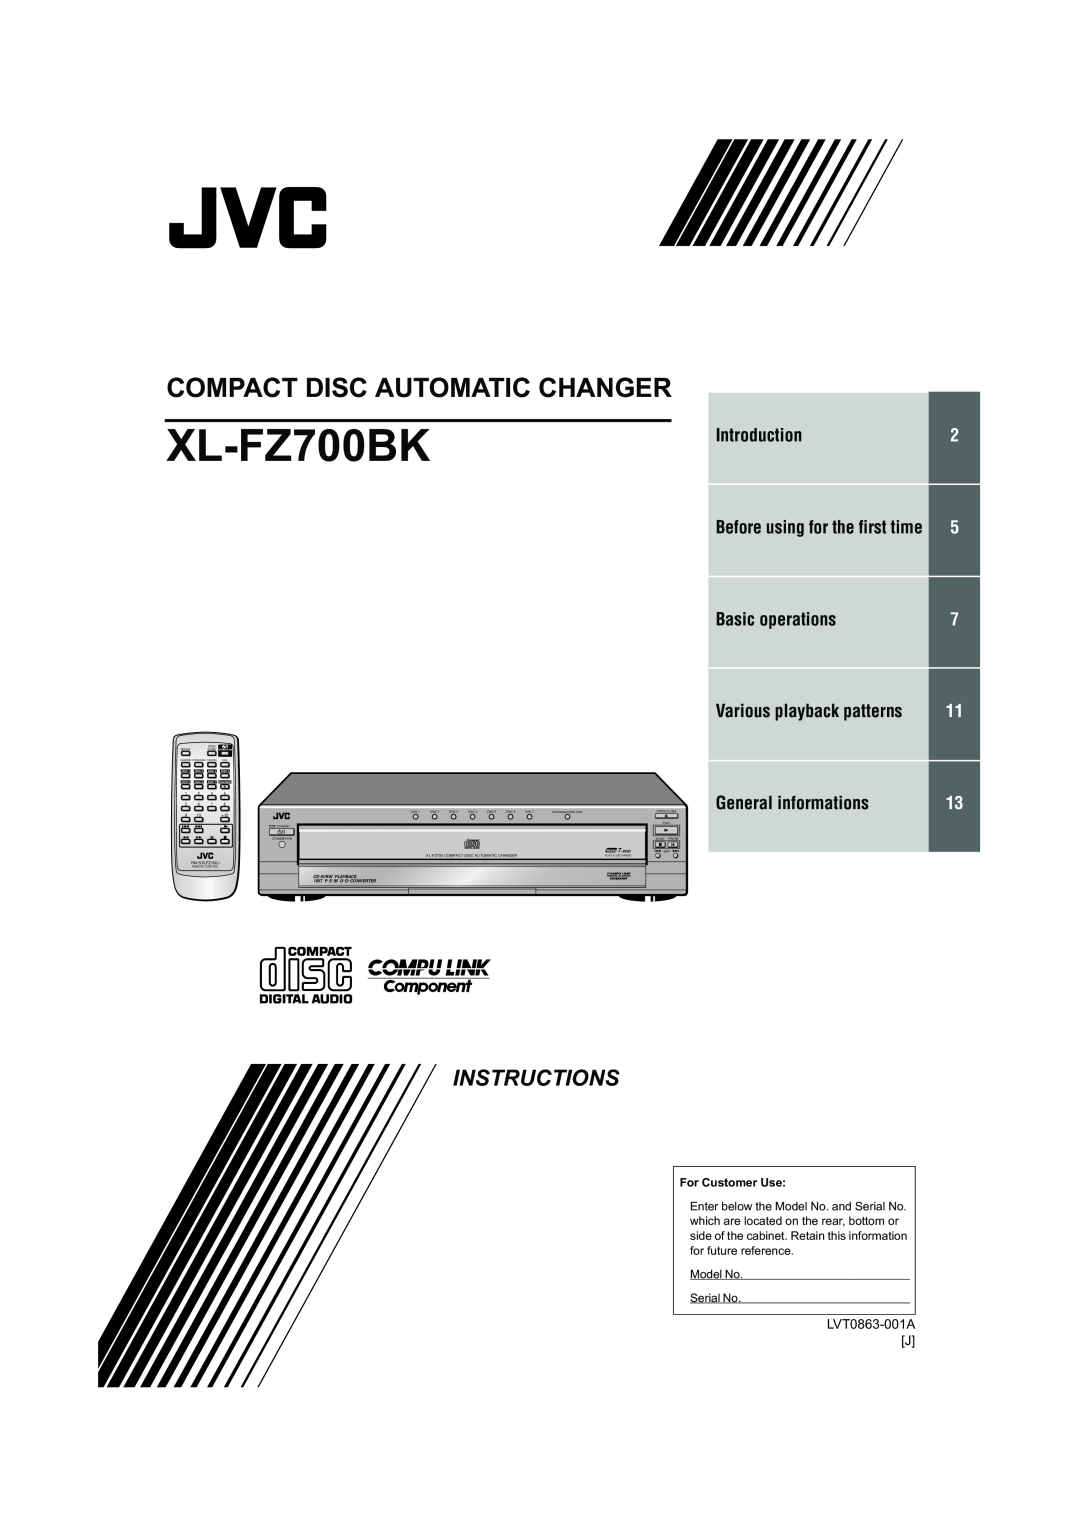 JVC XL-FZ700 manual 203$&7,6&$8720$7,&&+$1*5, Introduction, Basic operations, General informations, 16758&7,216, 6HULDO1R 